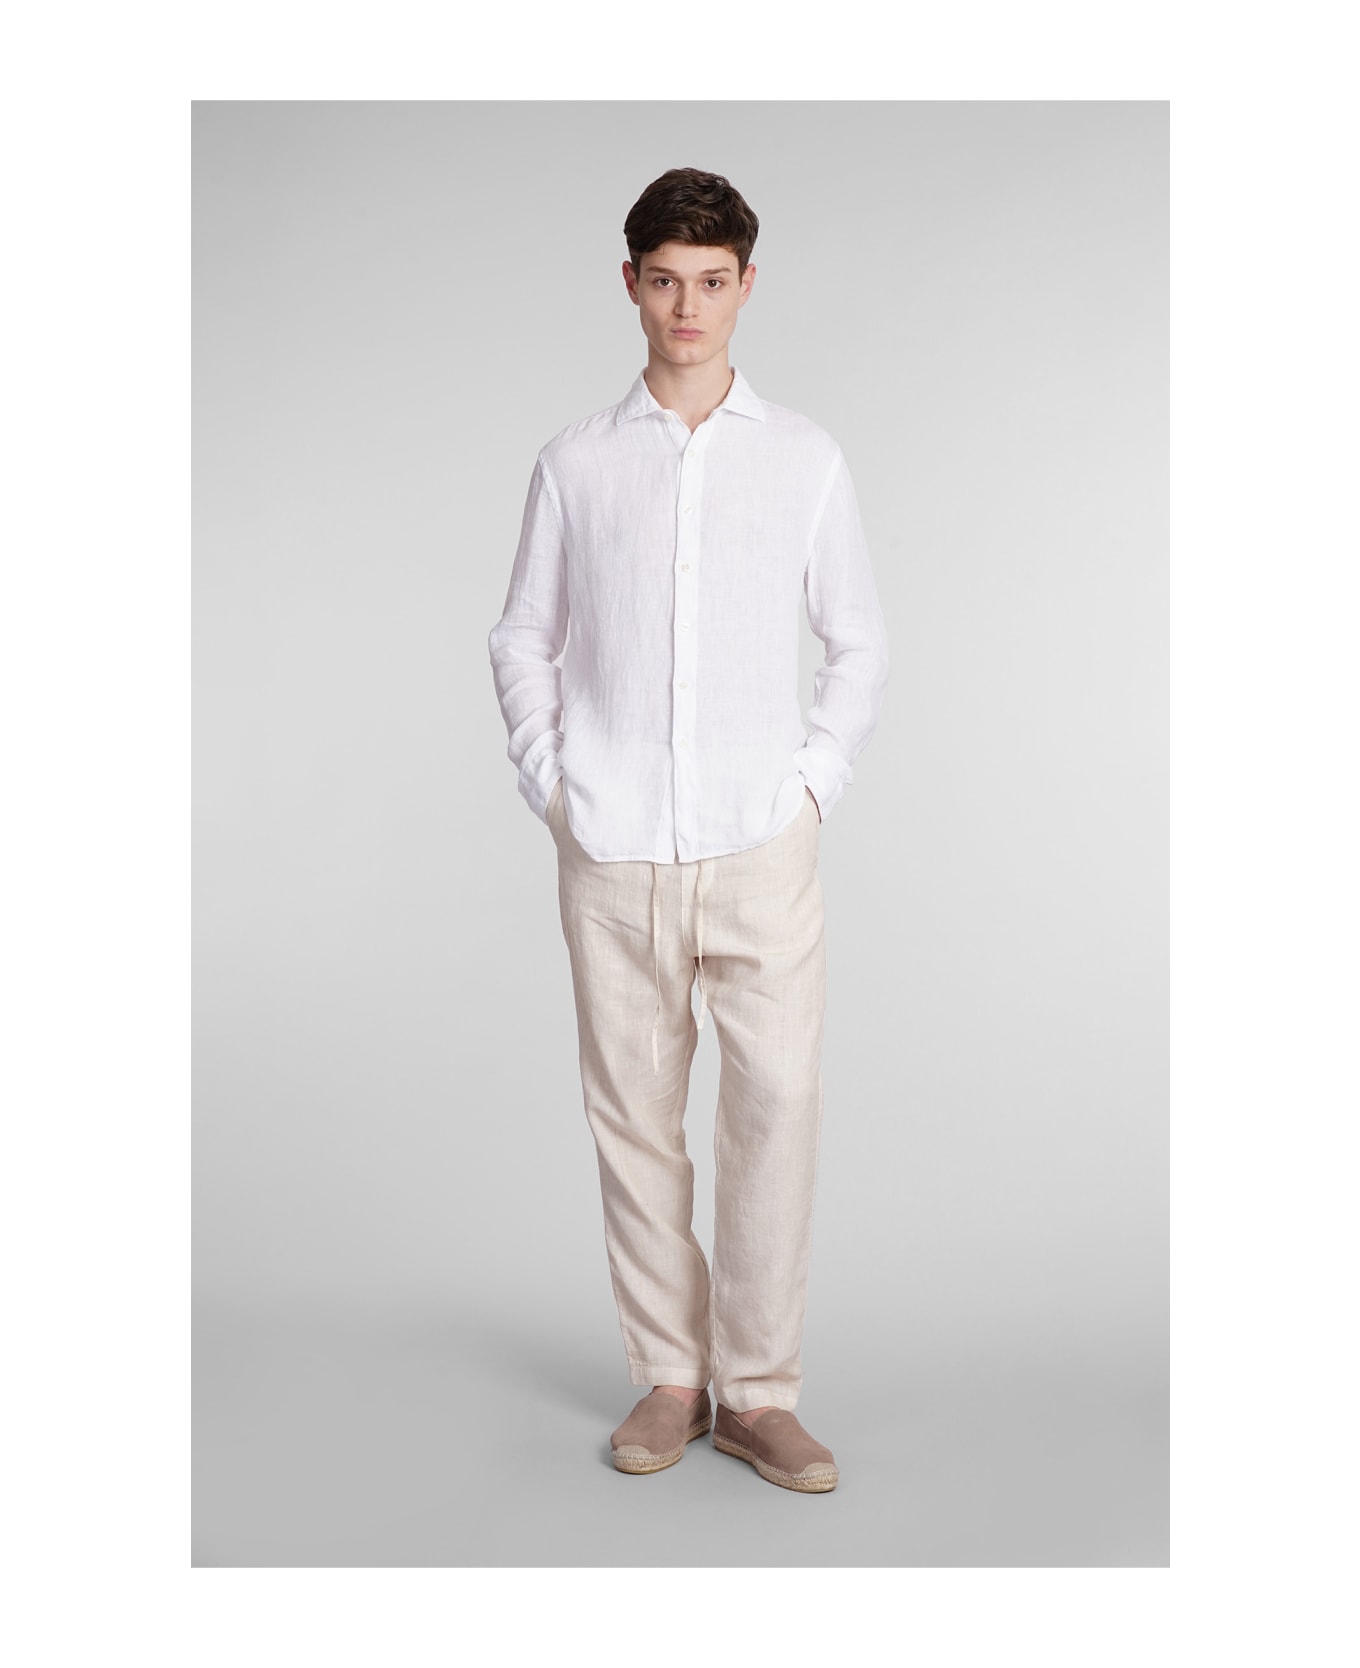 120% Lino Shirt In White Linen - White シャツ